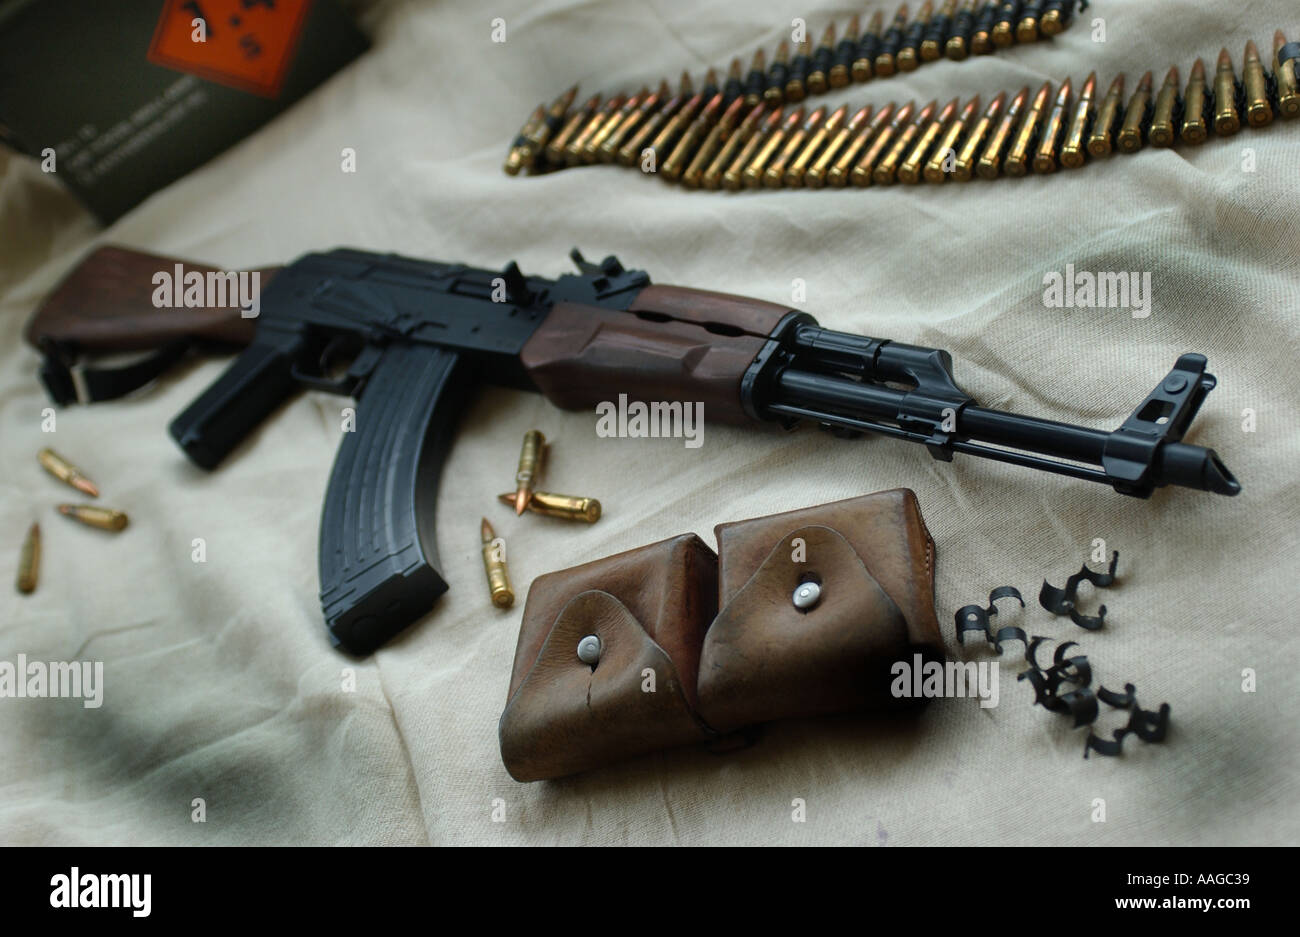 AK47 Kalashnikov rifle with ammunition and parts of webbing uniform Stock Photo